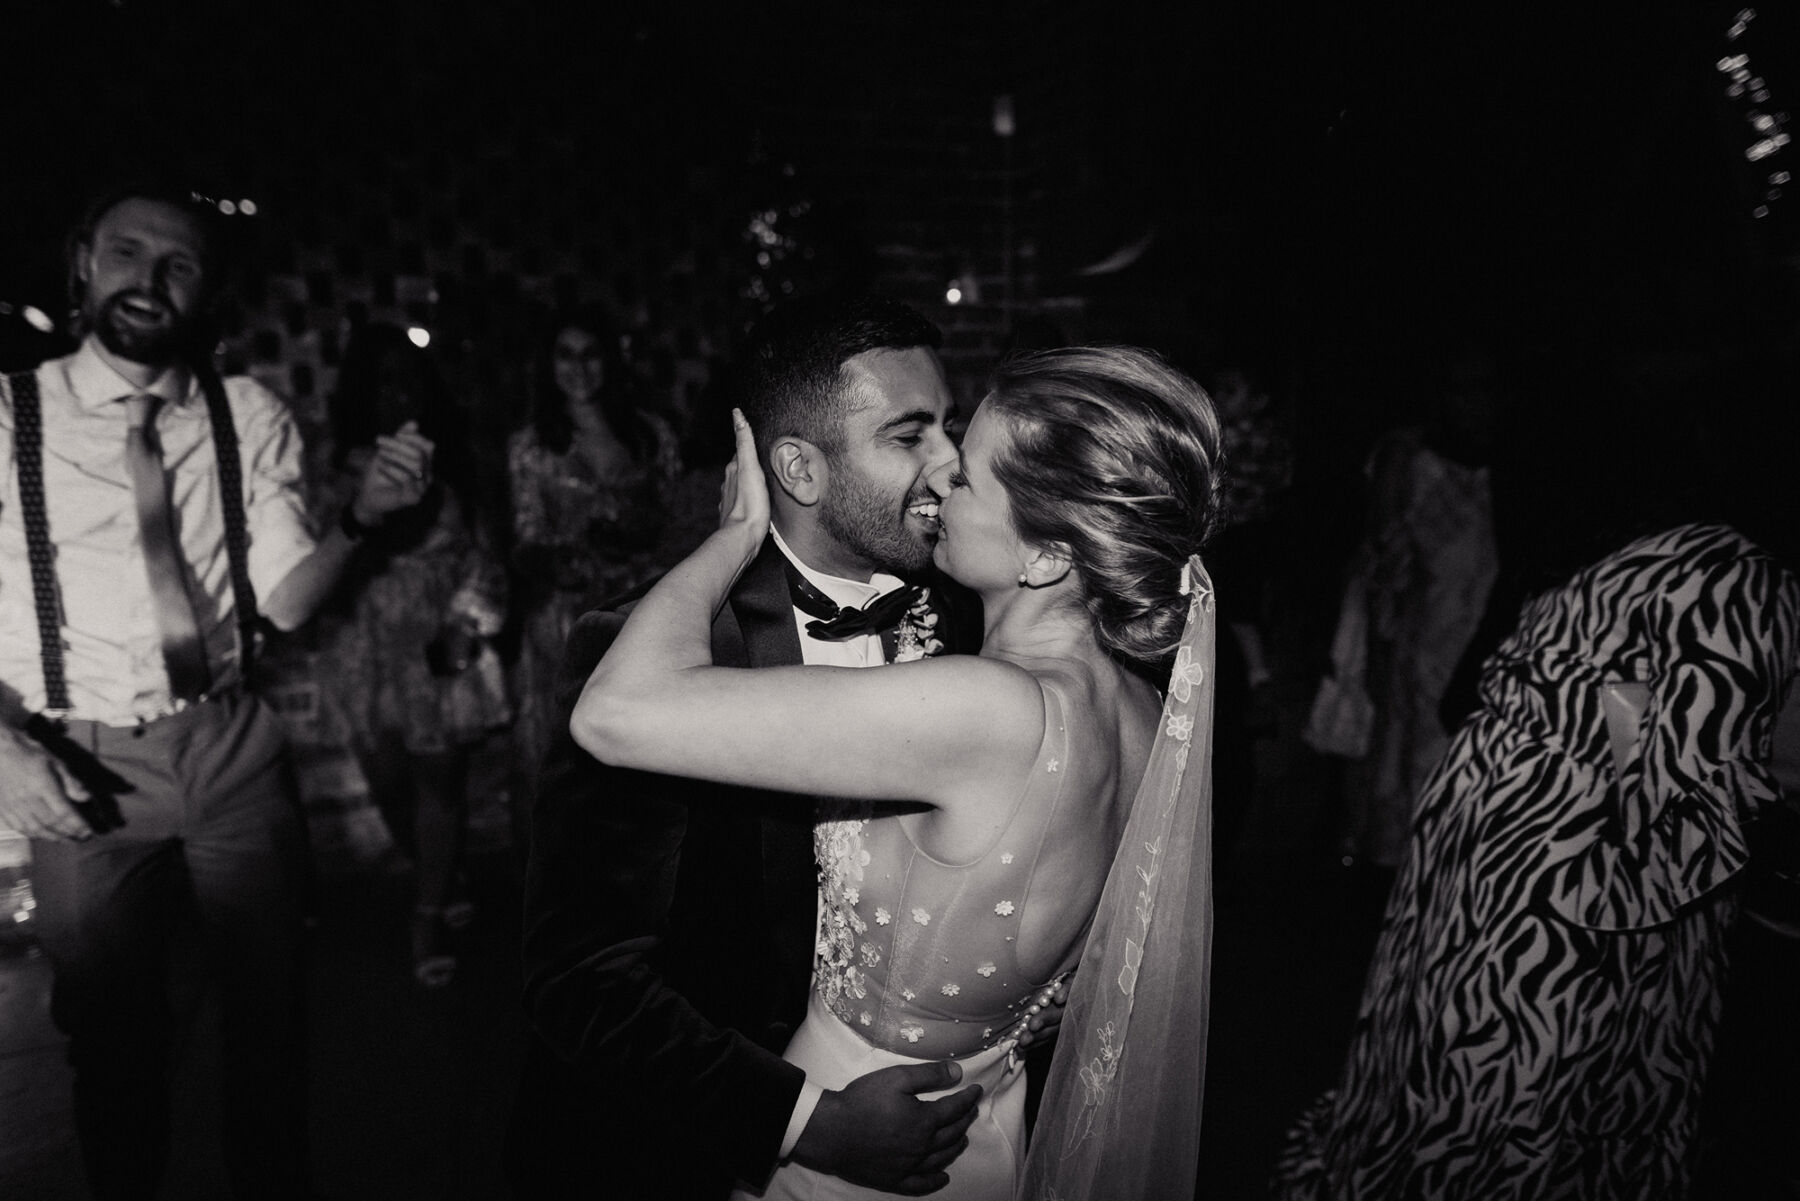 Glamorous bride and groom kissing on the dance floor